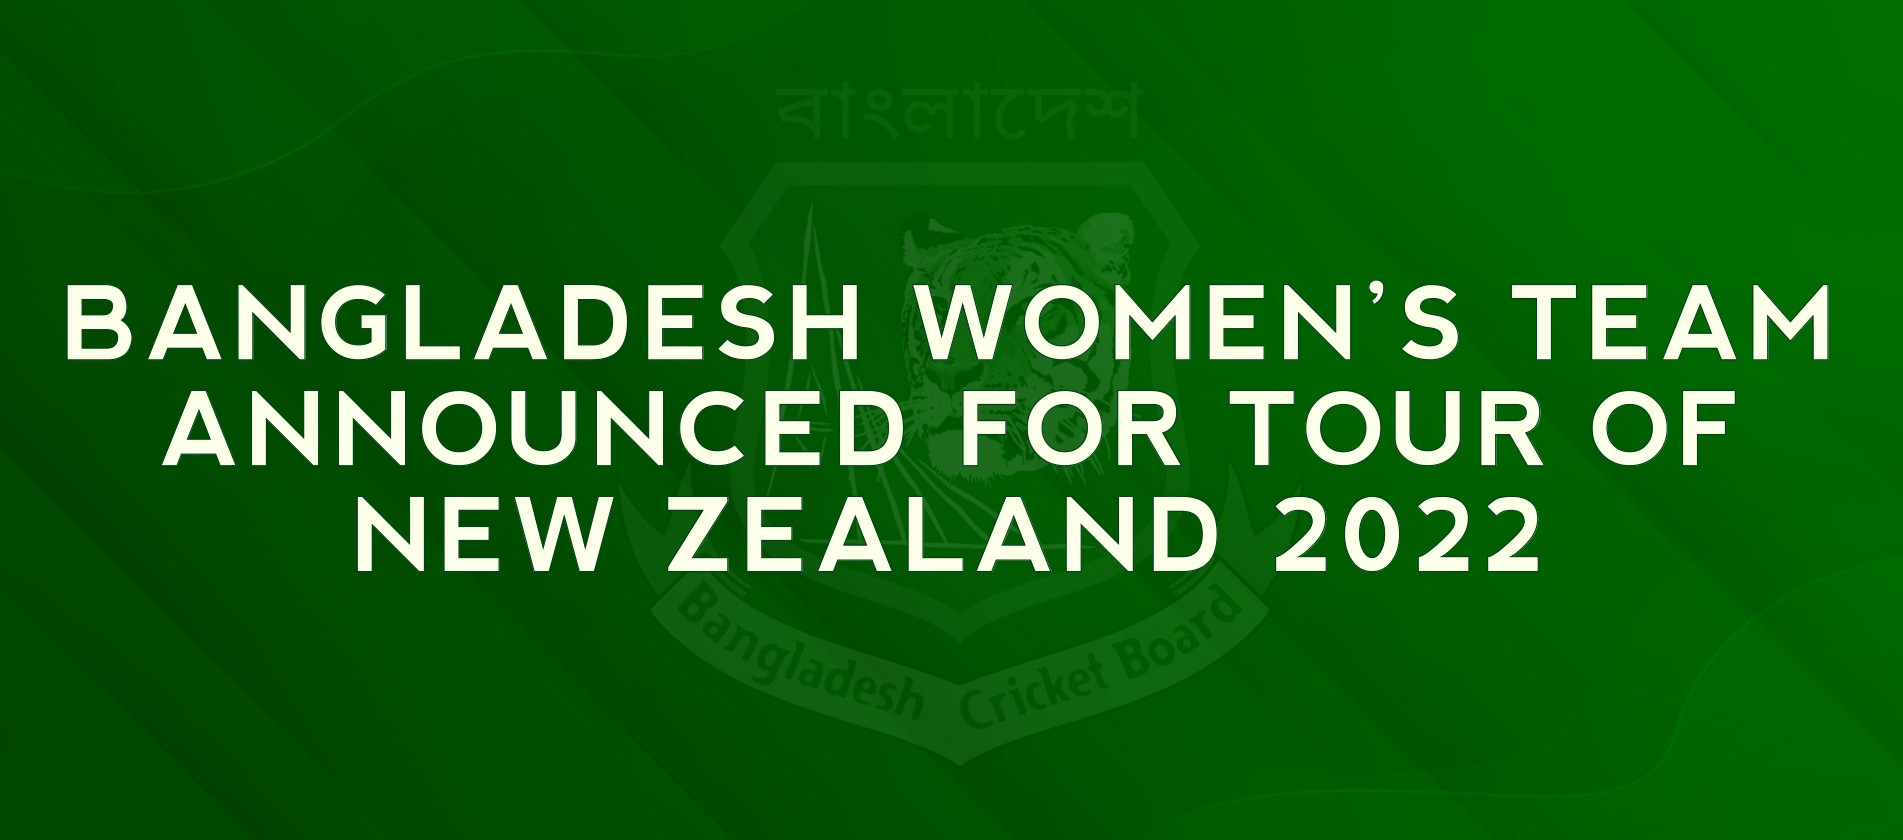 Bangladesh Women's Team announced for Tour of New Zealand 2022